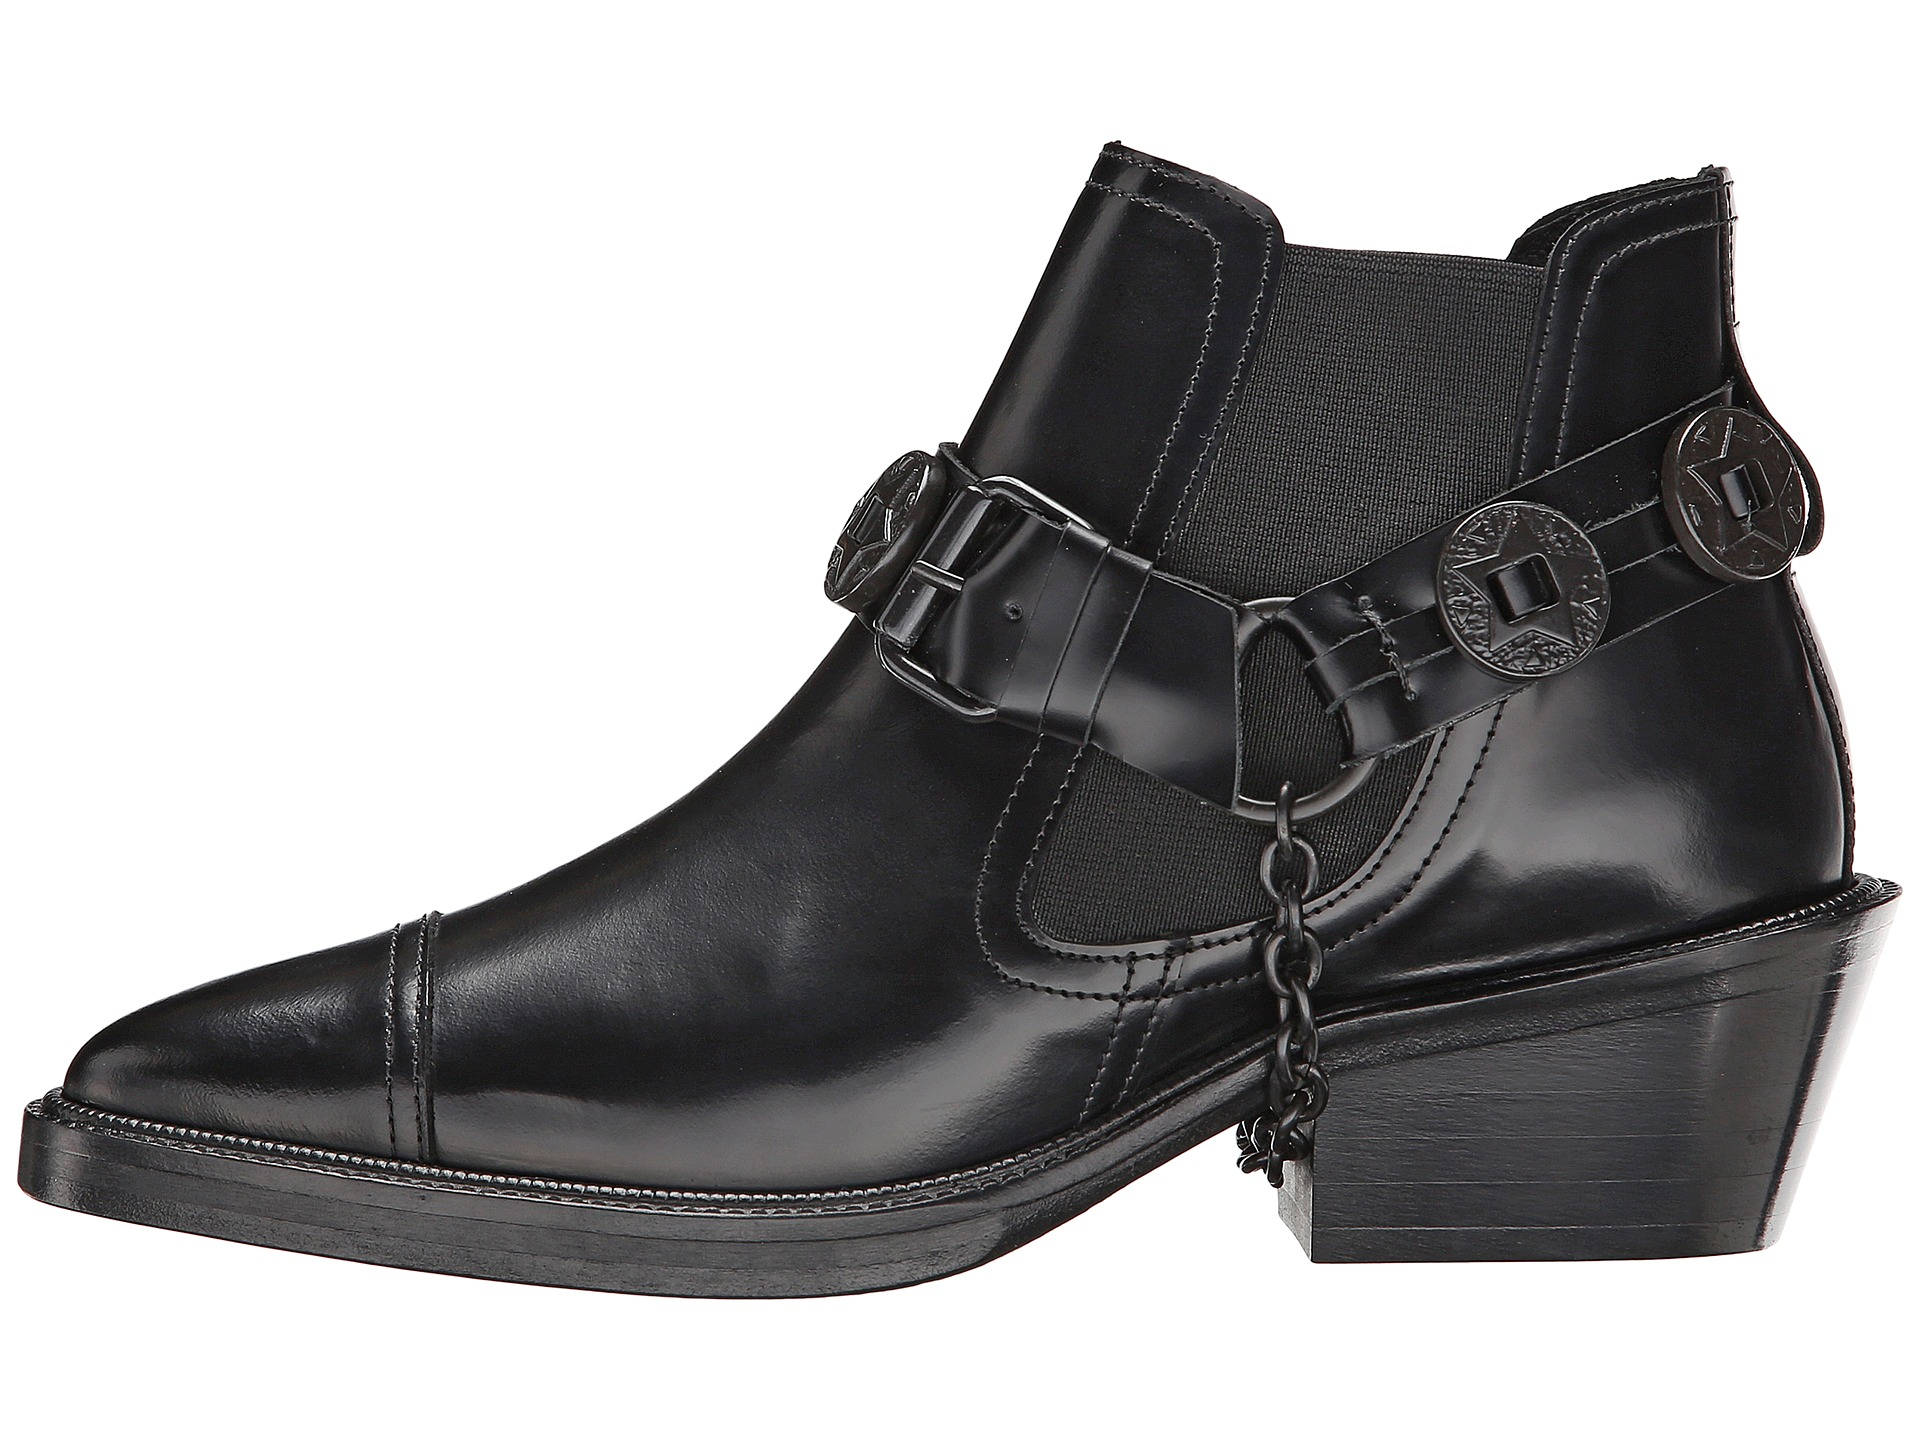 Lyst - The kooples Western Mini Boots in Black